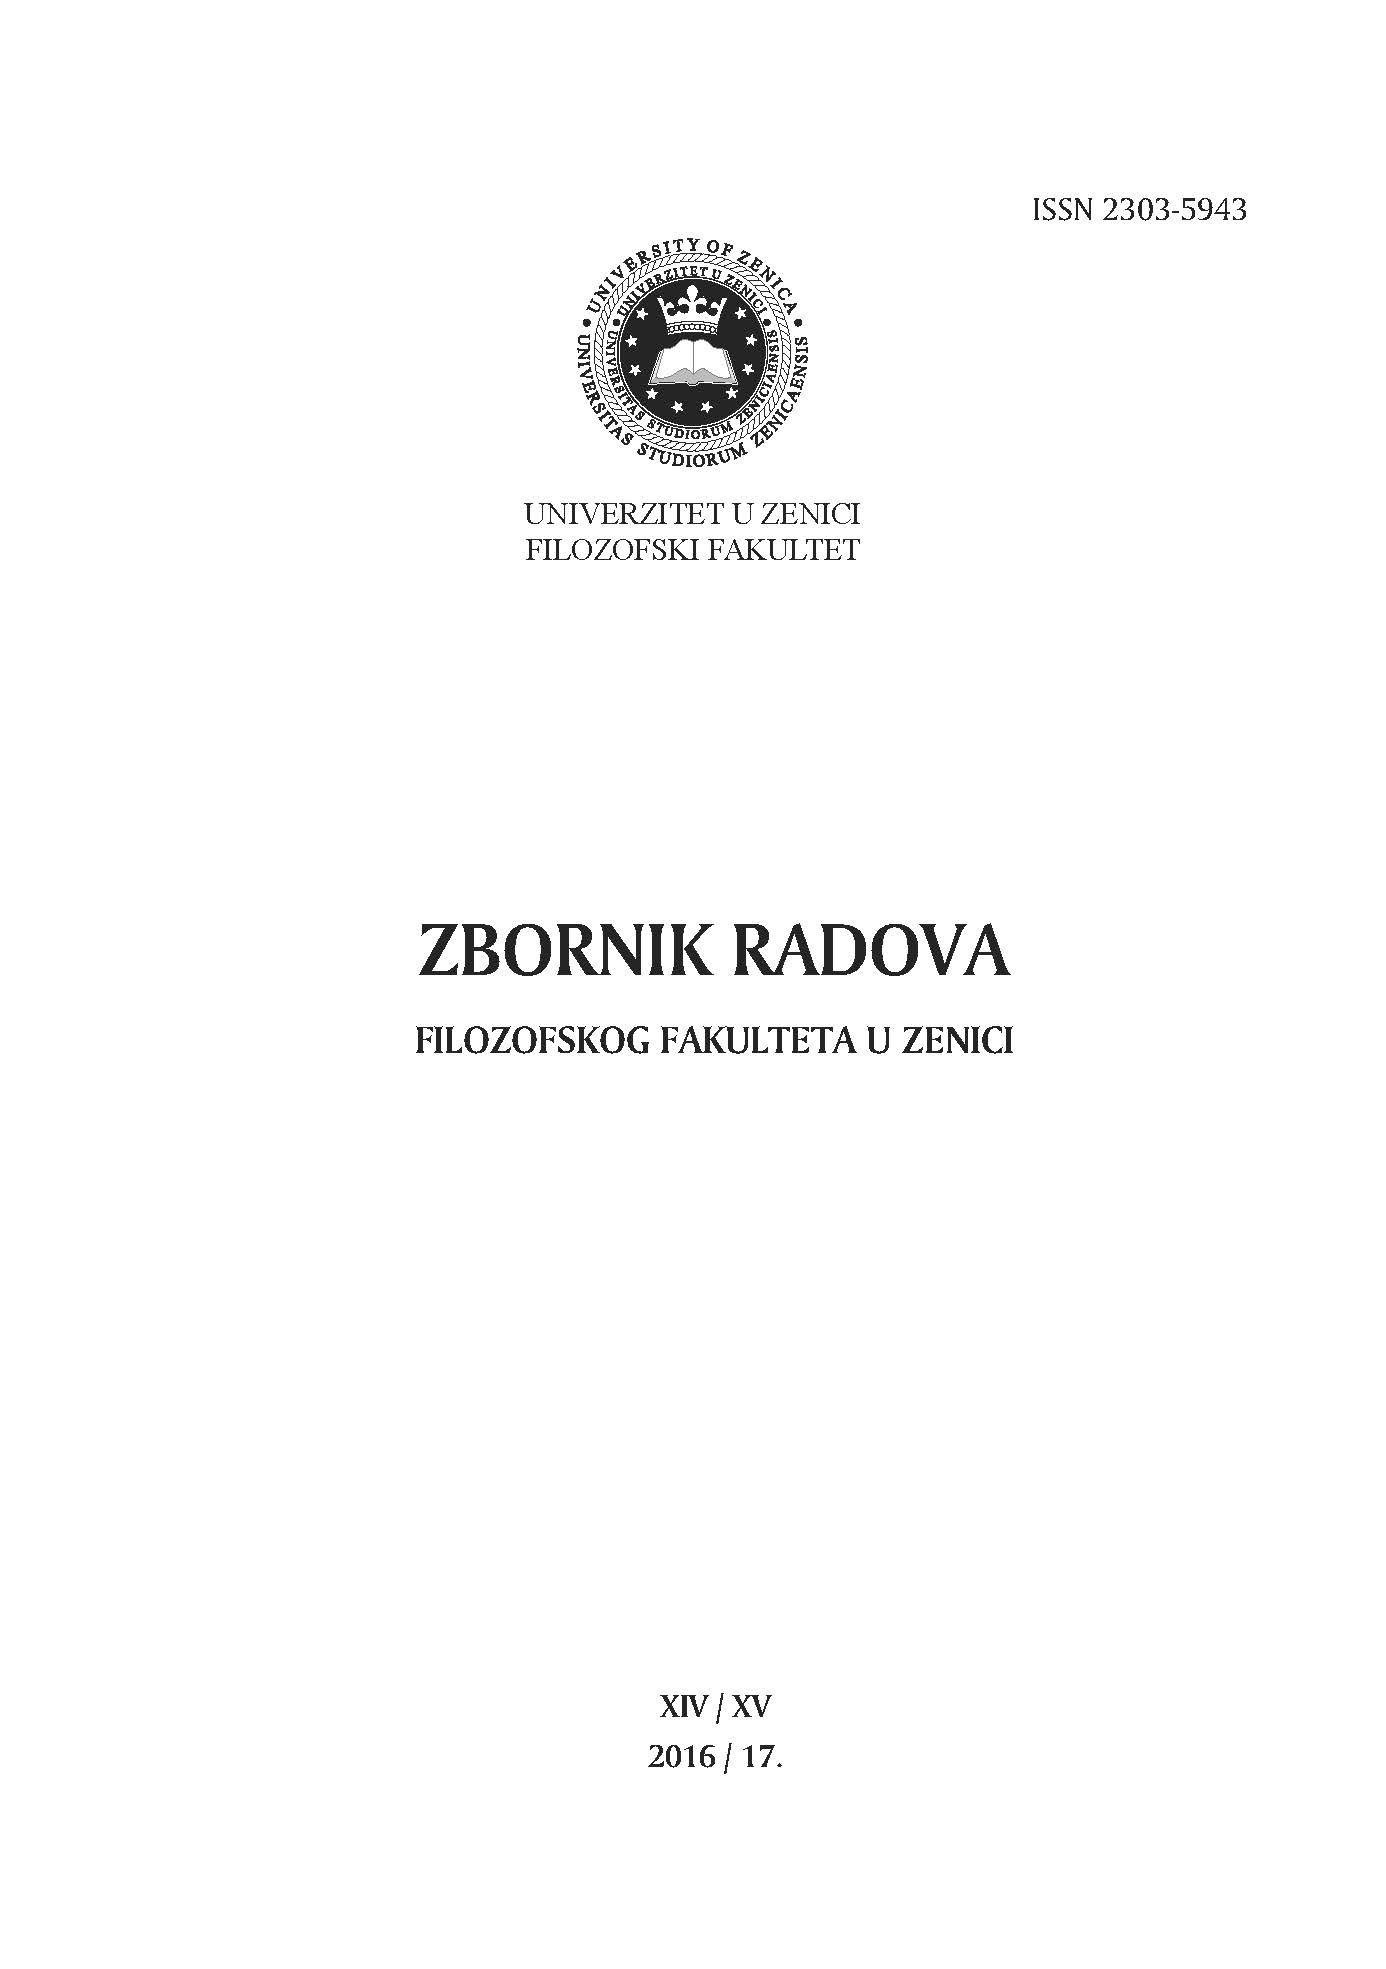 Proceedings of Faculty of Philosophy